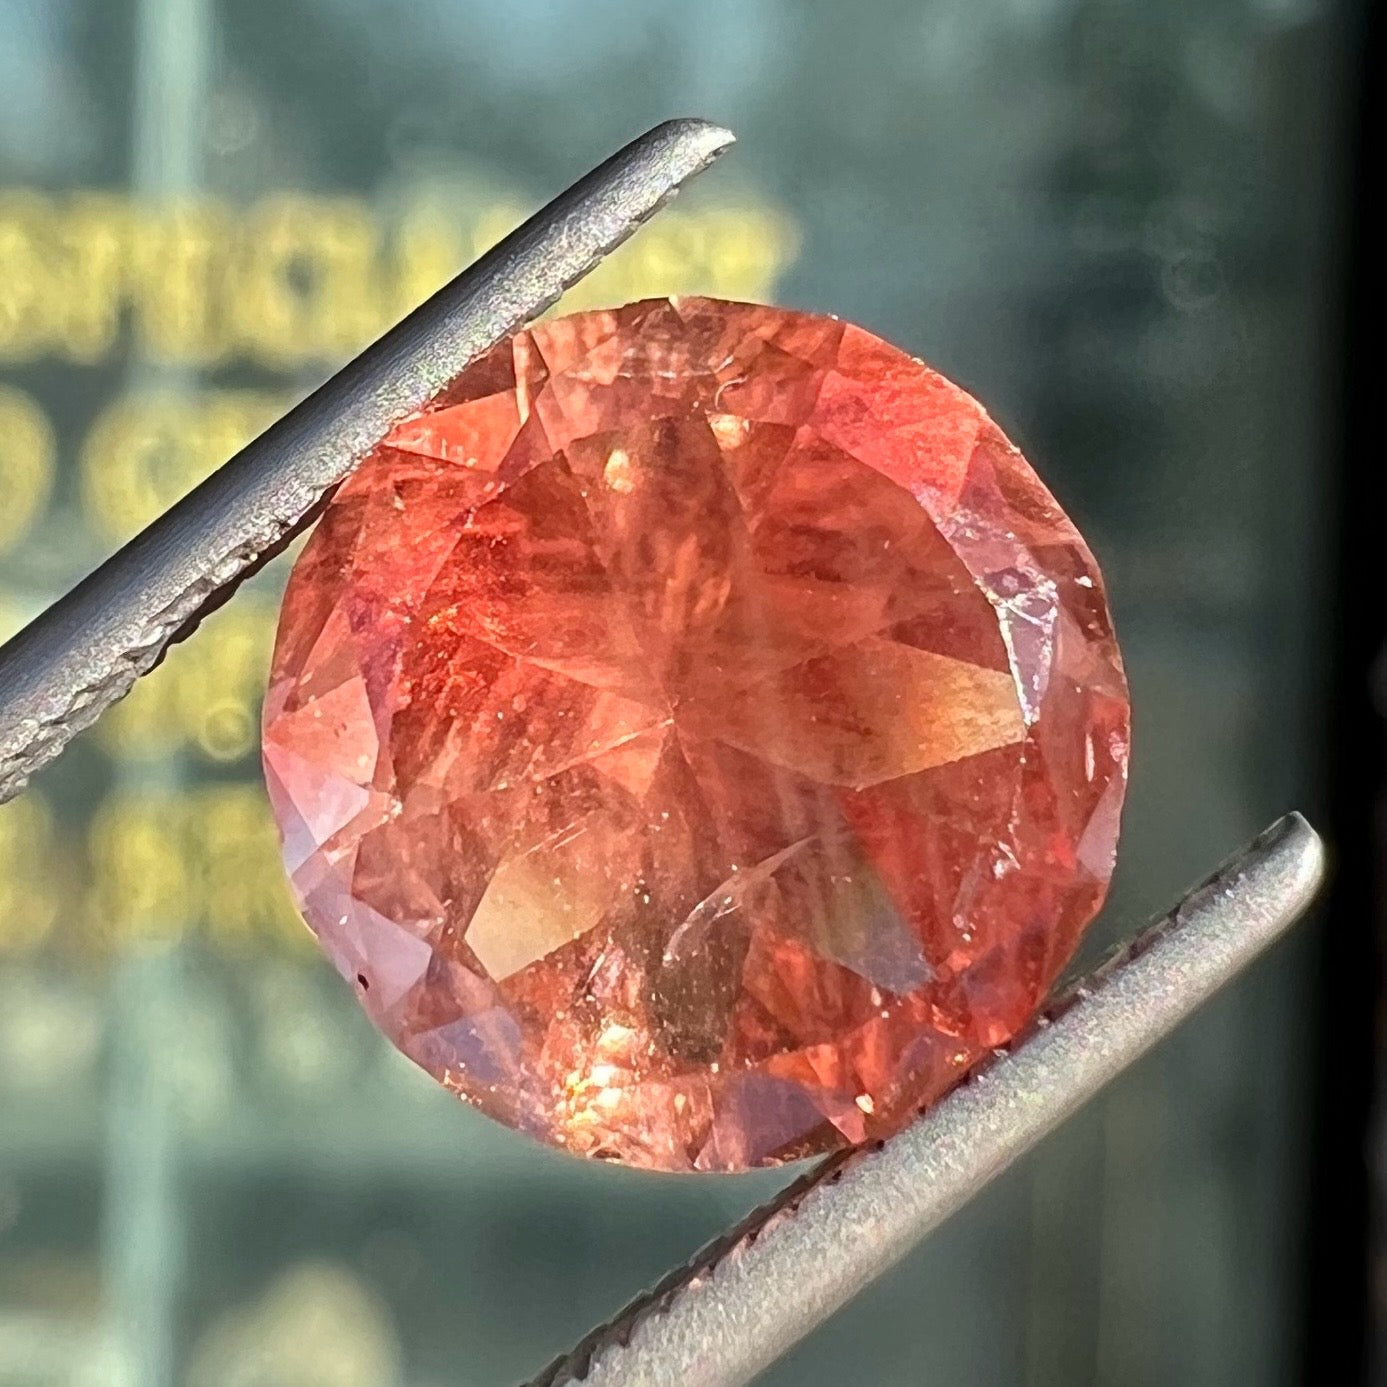 A loose, round brilliant cut Oregon sunstone gem.